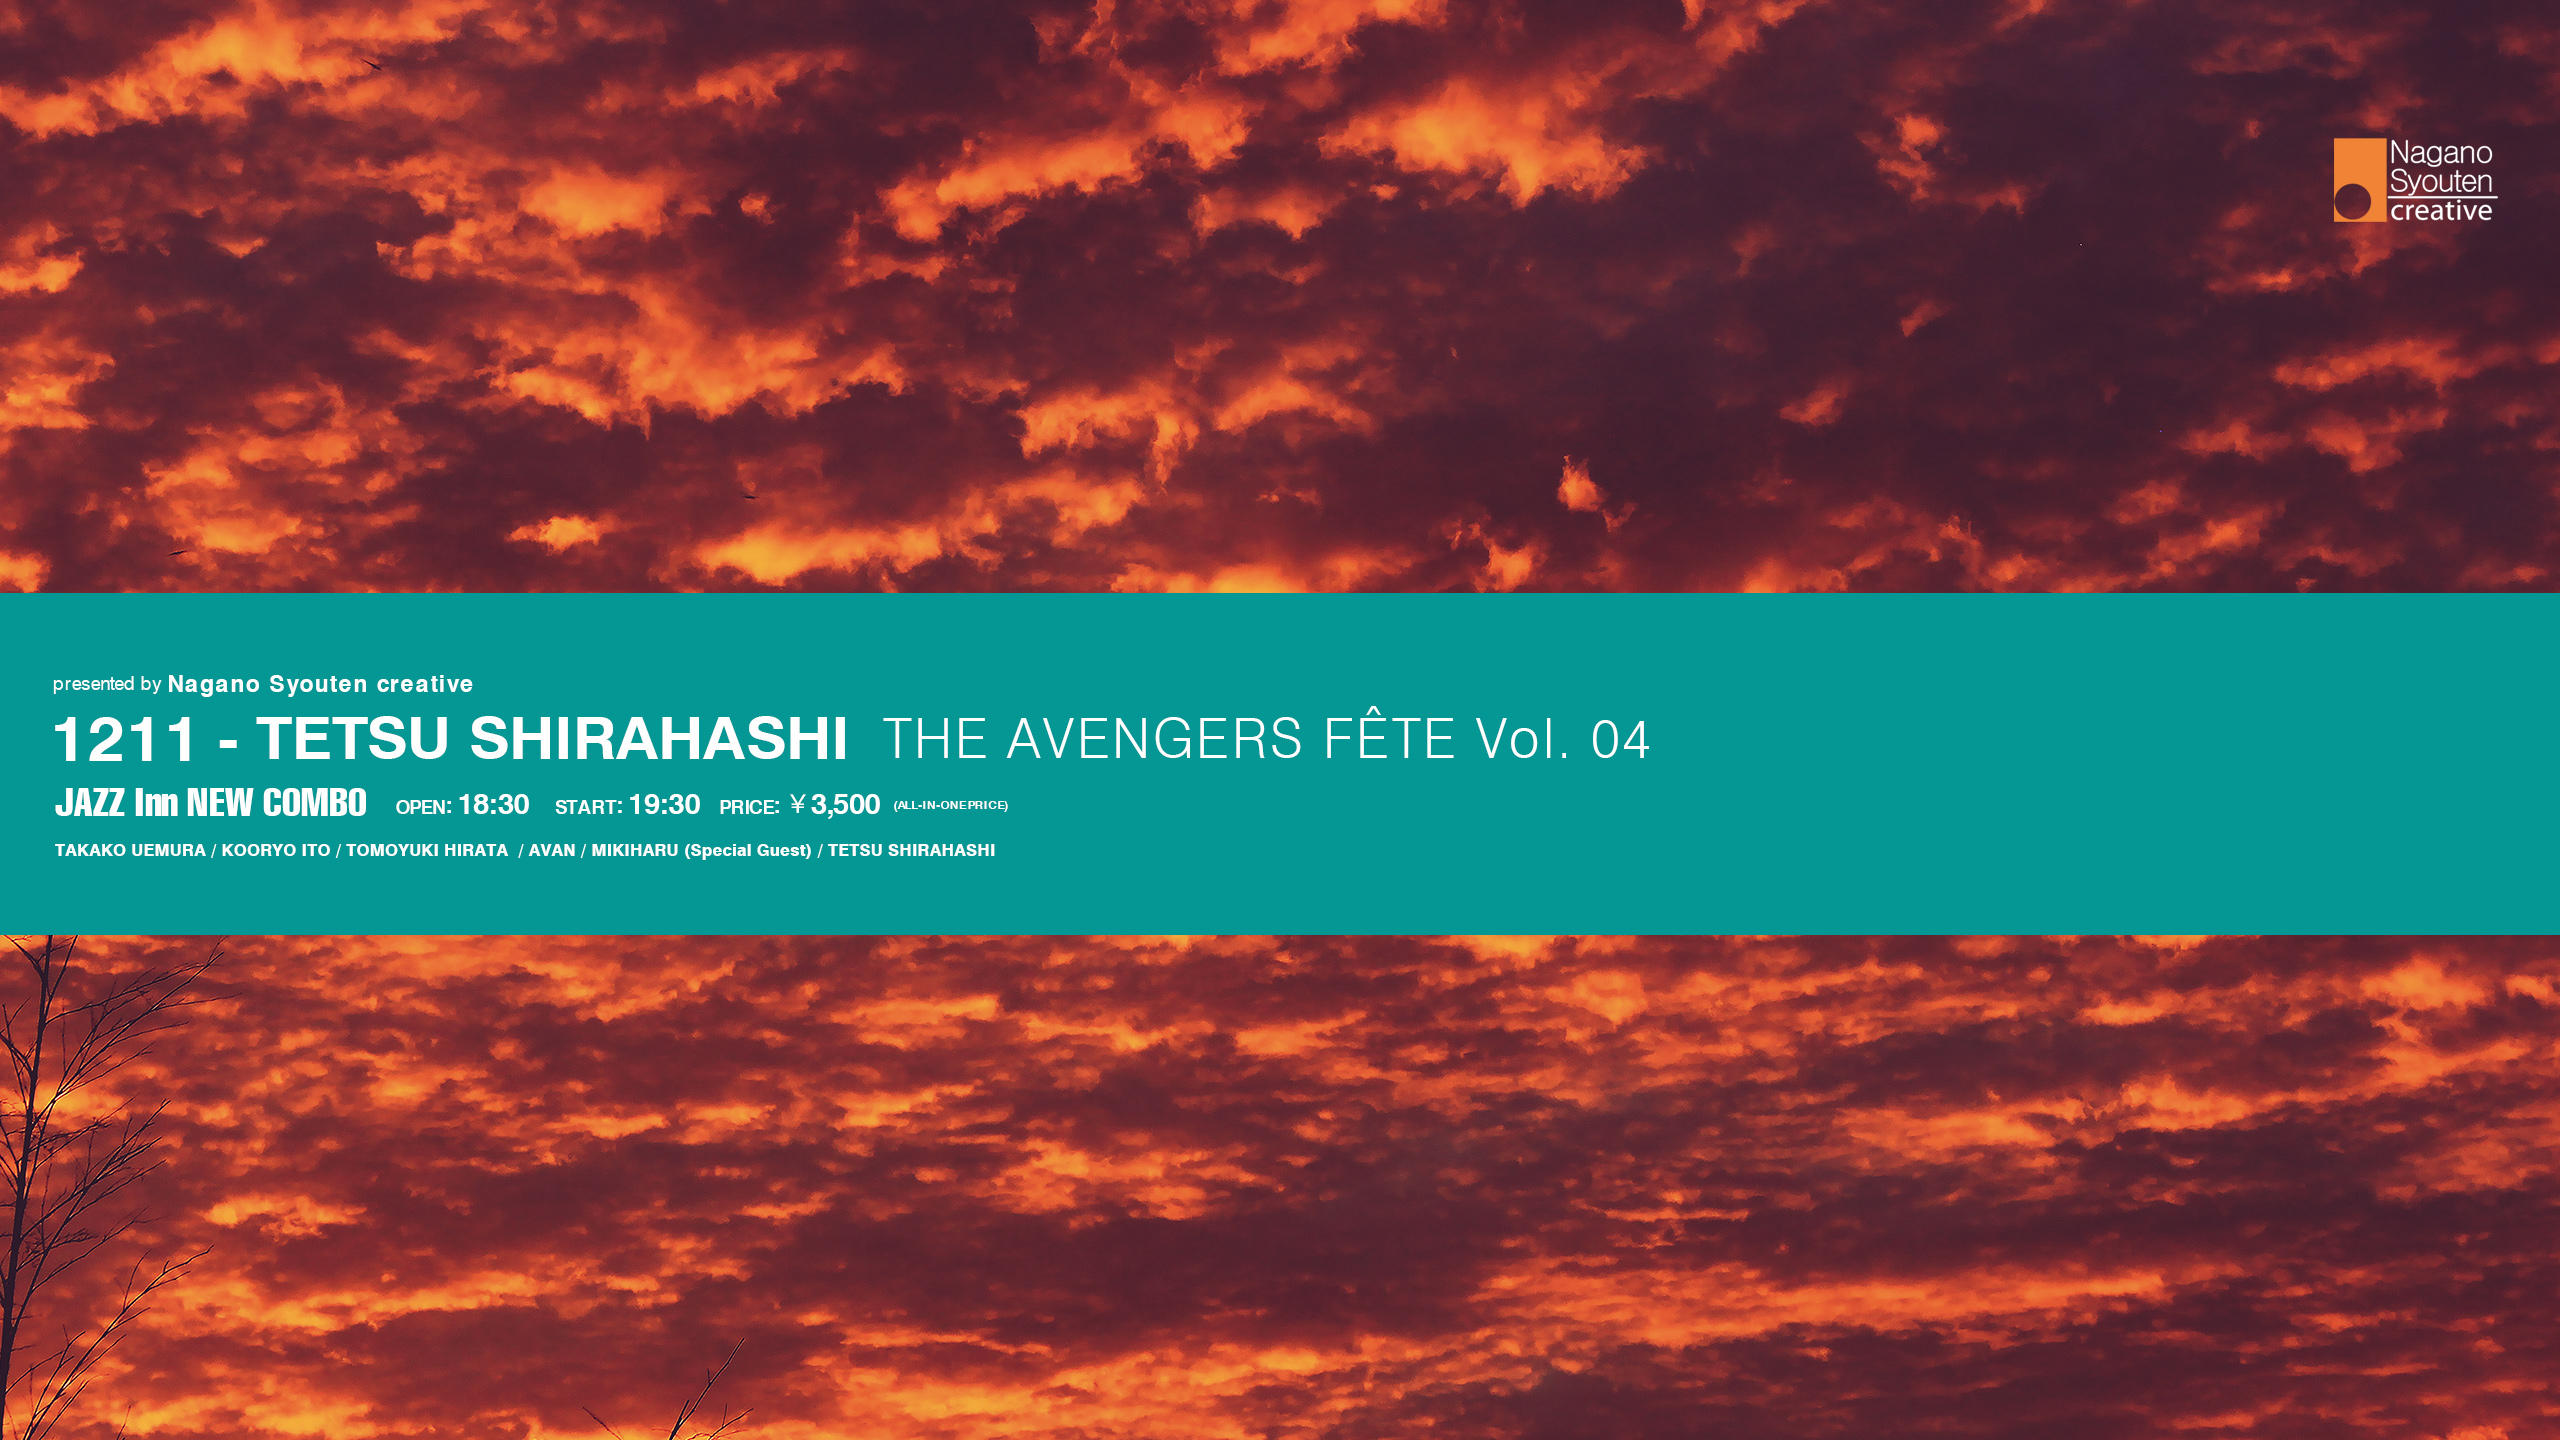 1211 - TETSU SHIRAHASHI "THE AVENGERS FÊTE Vol. 04 @ JAZZ Inn NEW COMBO.